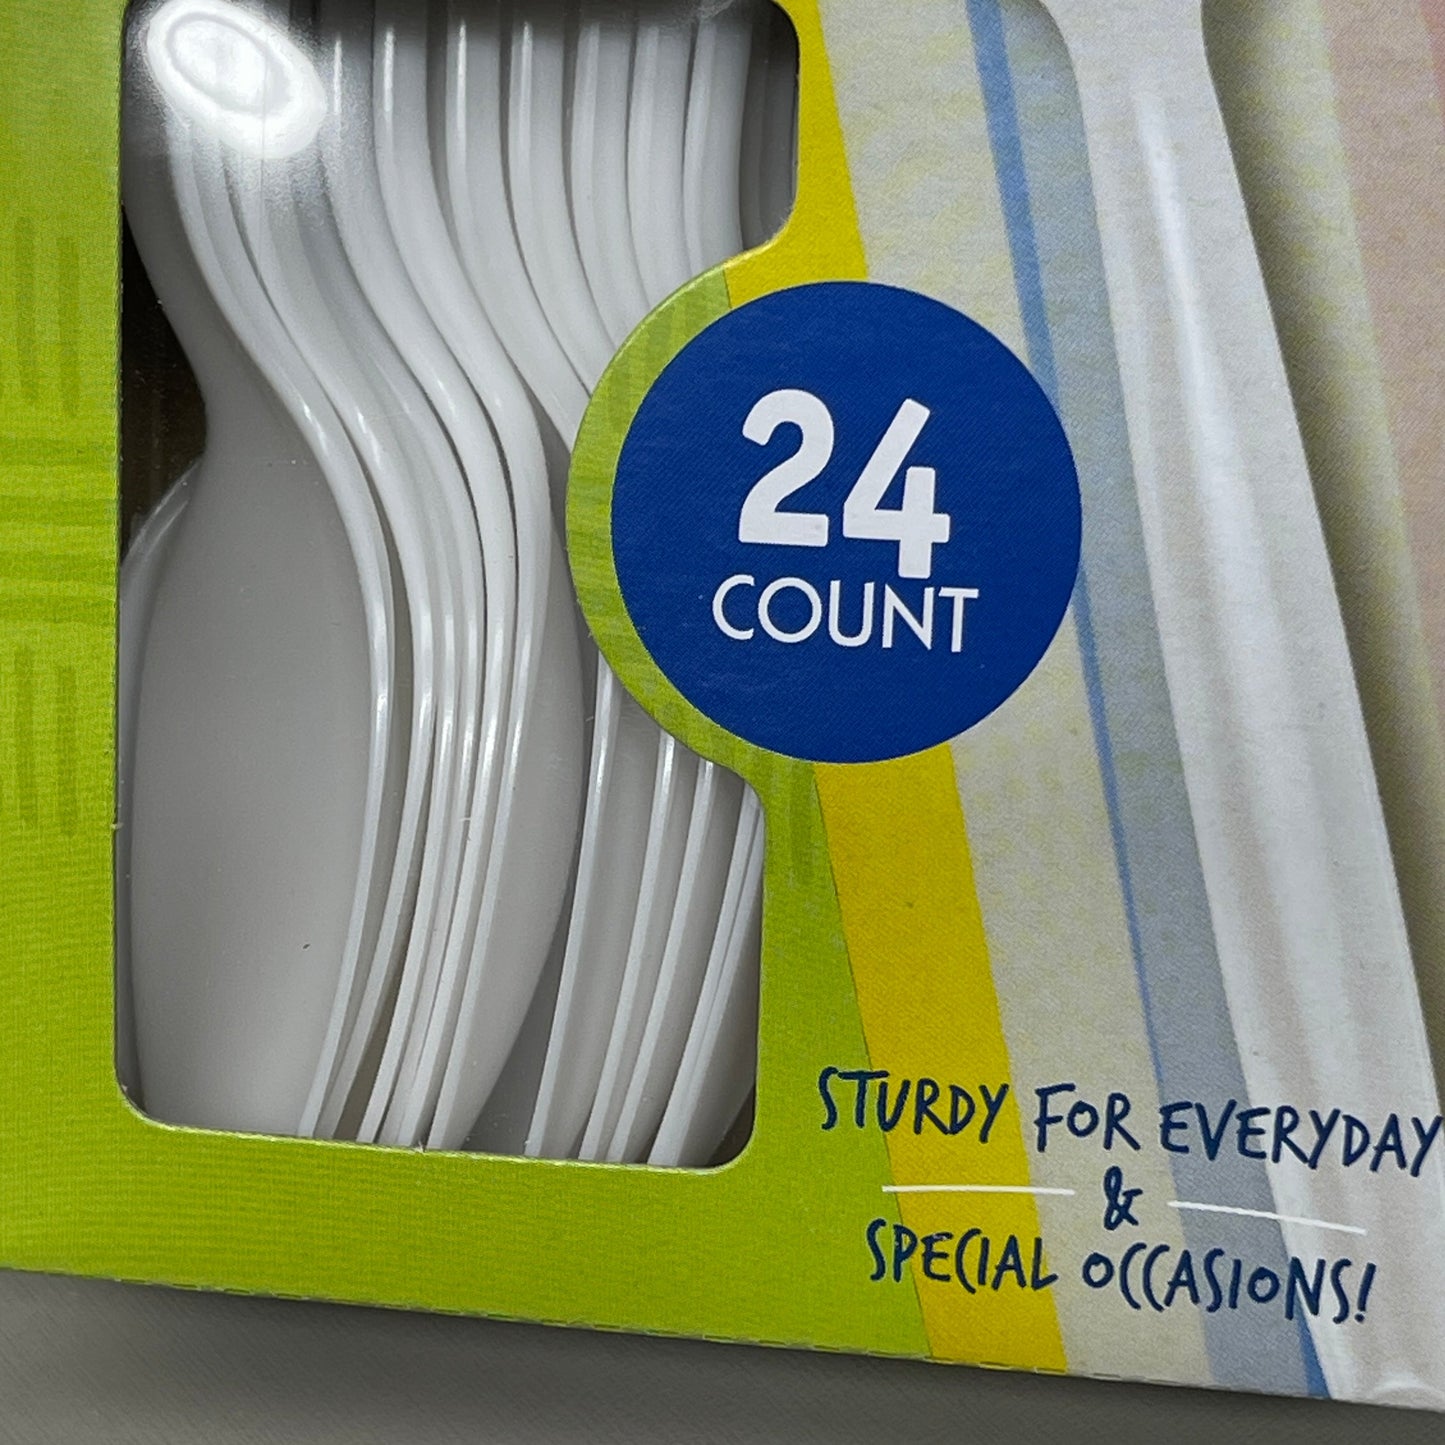 LIFE GOODS Heavy Duty Shatter Resistance Plastic Spoons White 24 Pack (NEW)